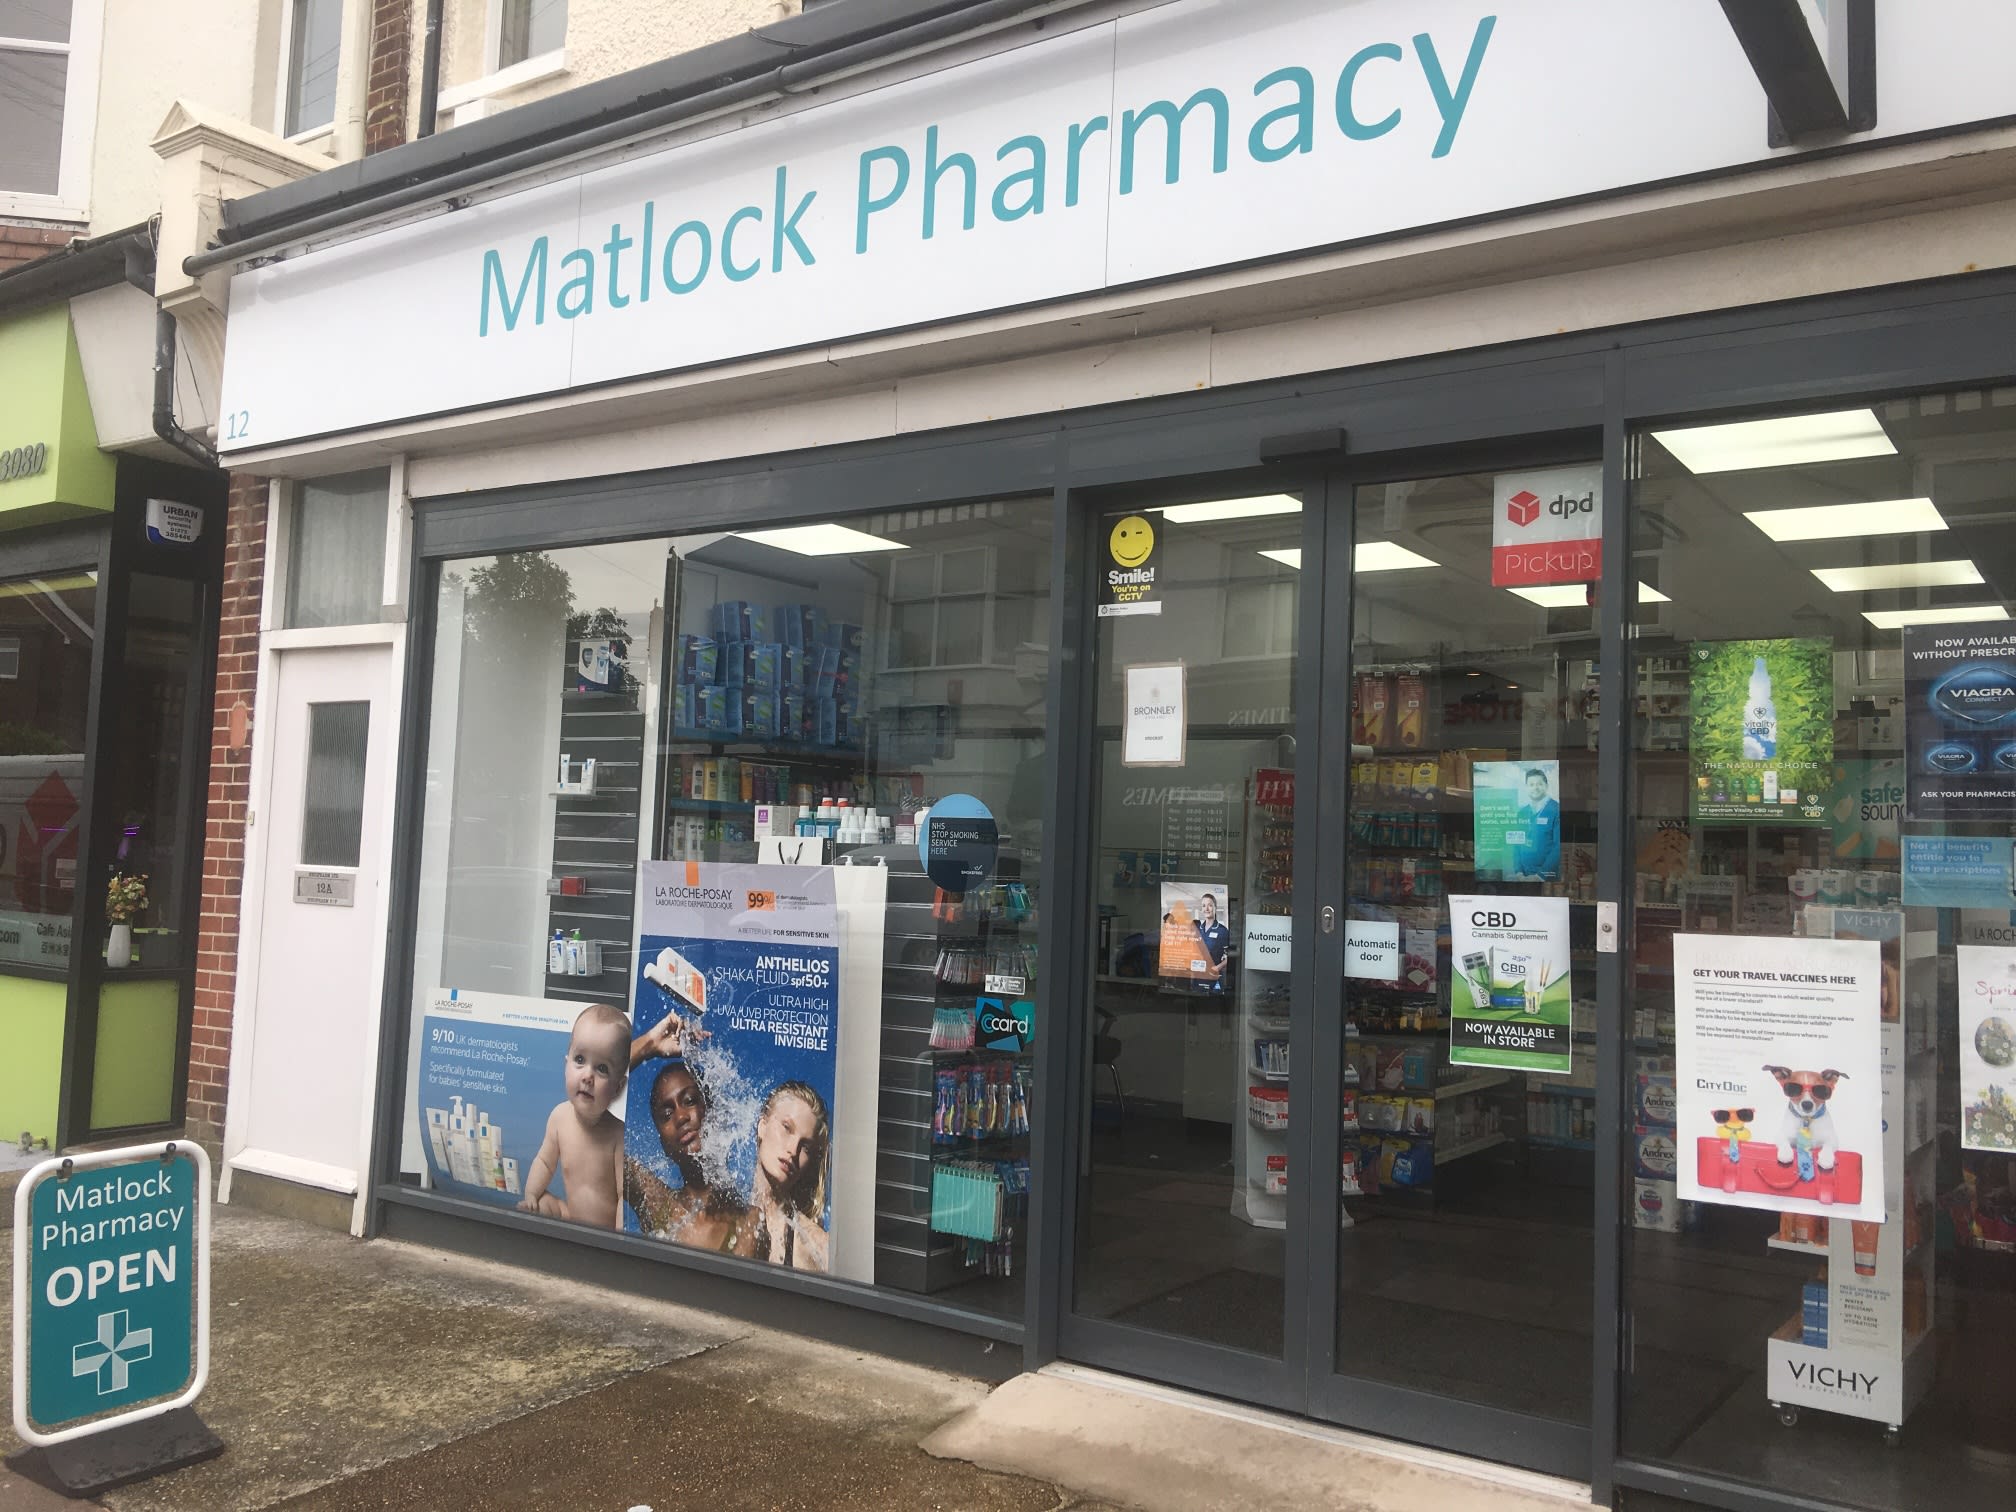 Images Matlock Pharmacy